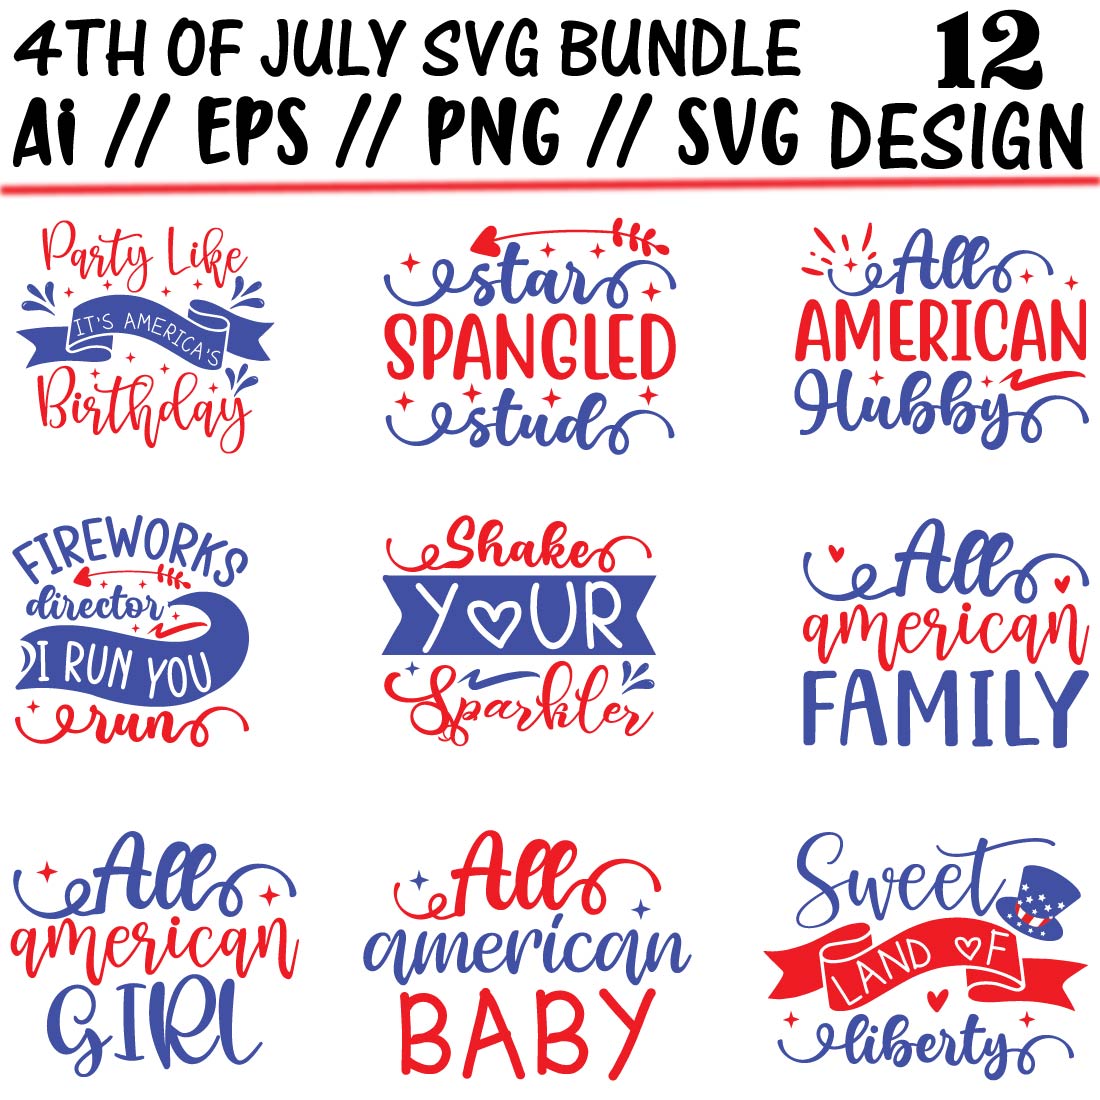 4th Of July SVG Bundle cover image.